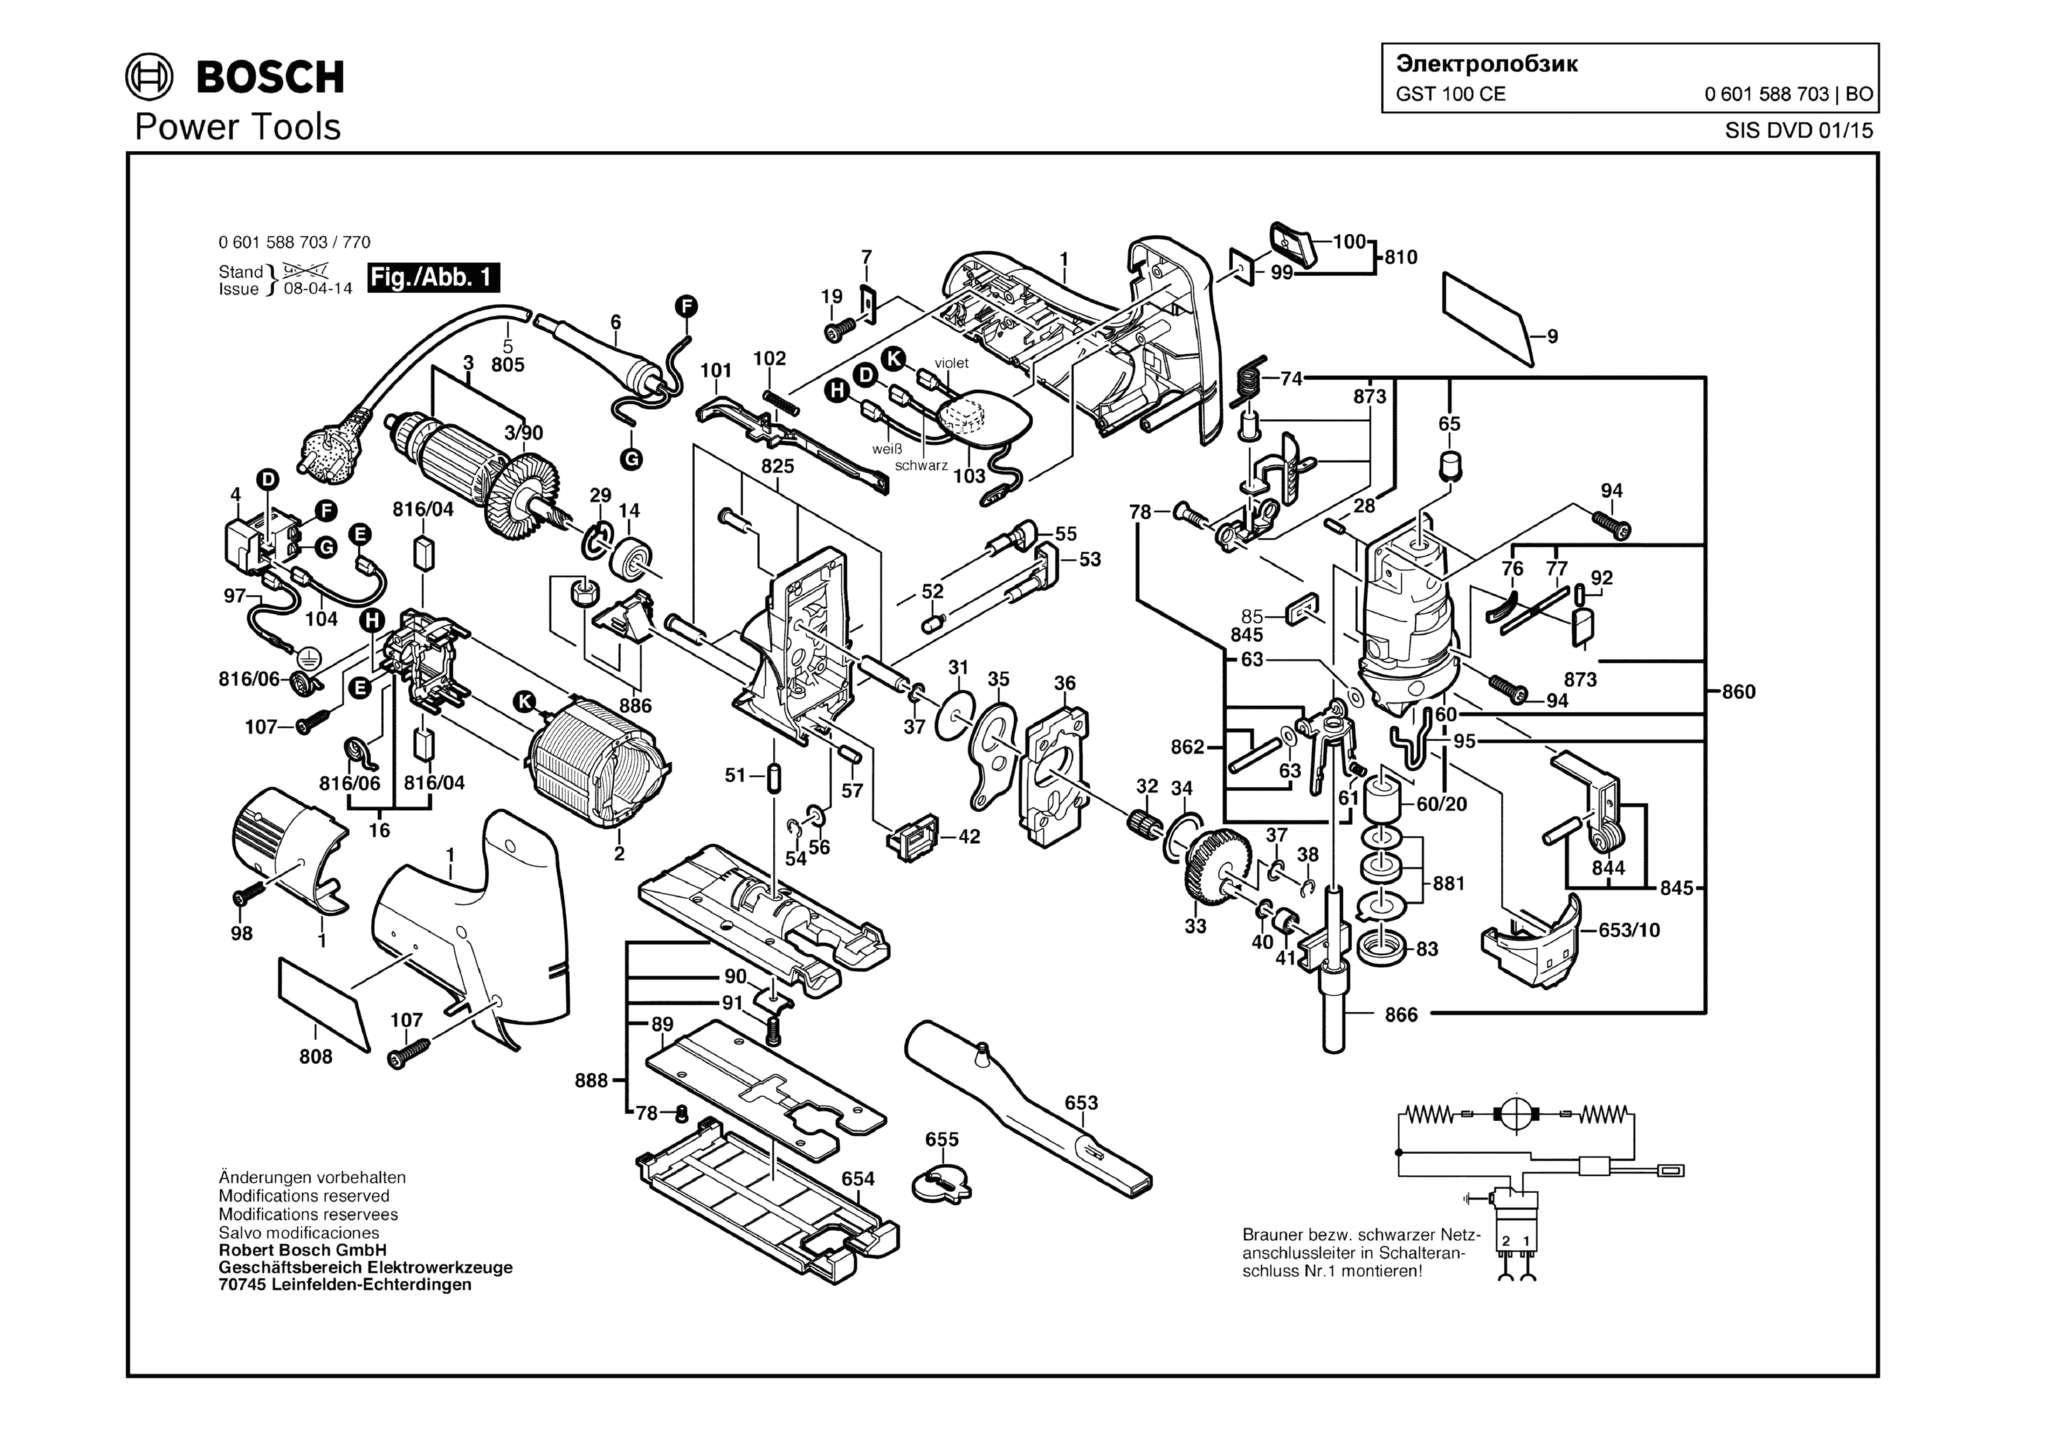 Запчасти, схема и деталировка Bosch GST 100 CE (ТИП 0601588703)